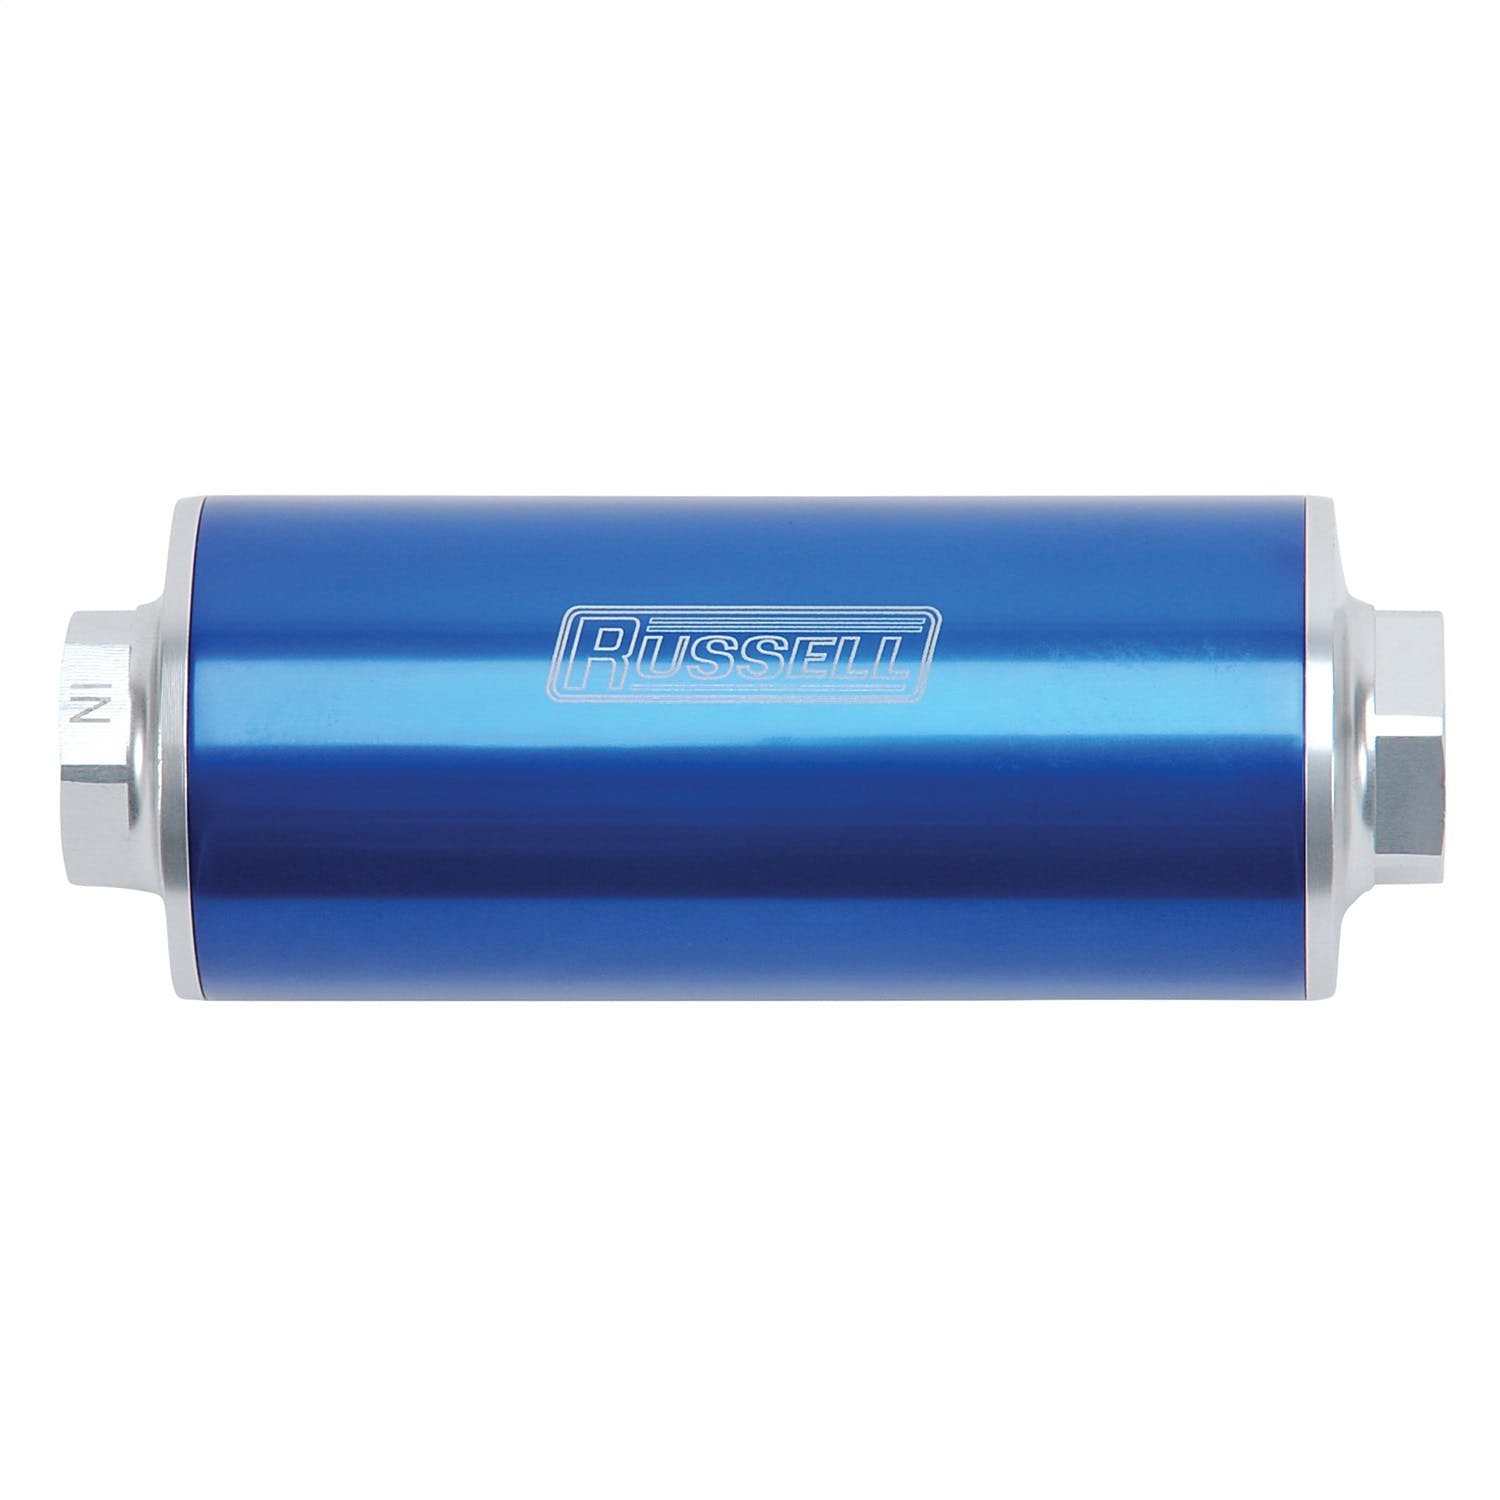 Russell 649262 Fuel filter, Profilter, 6” long, 60 Micron, #10 AN Inlet/#10 AN Outlet, Blu